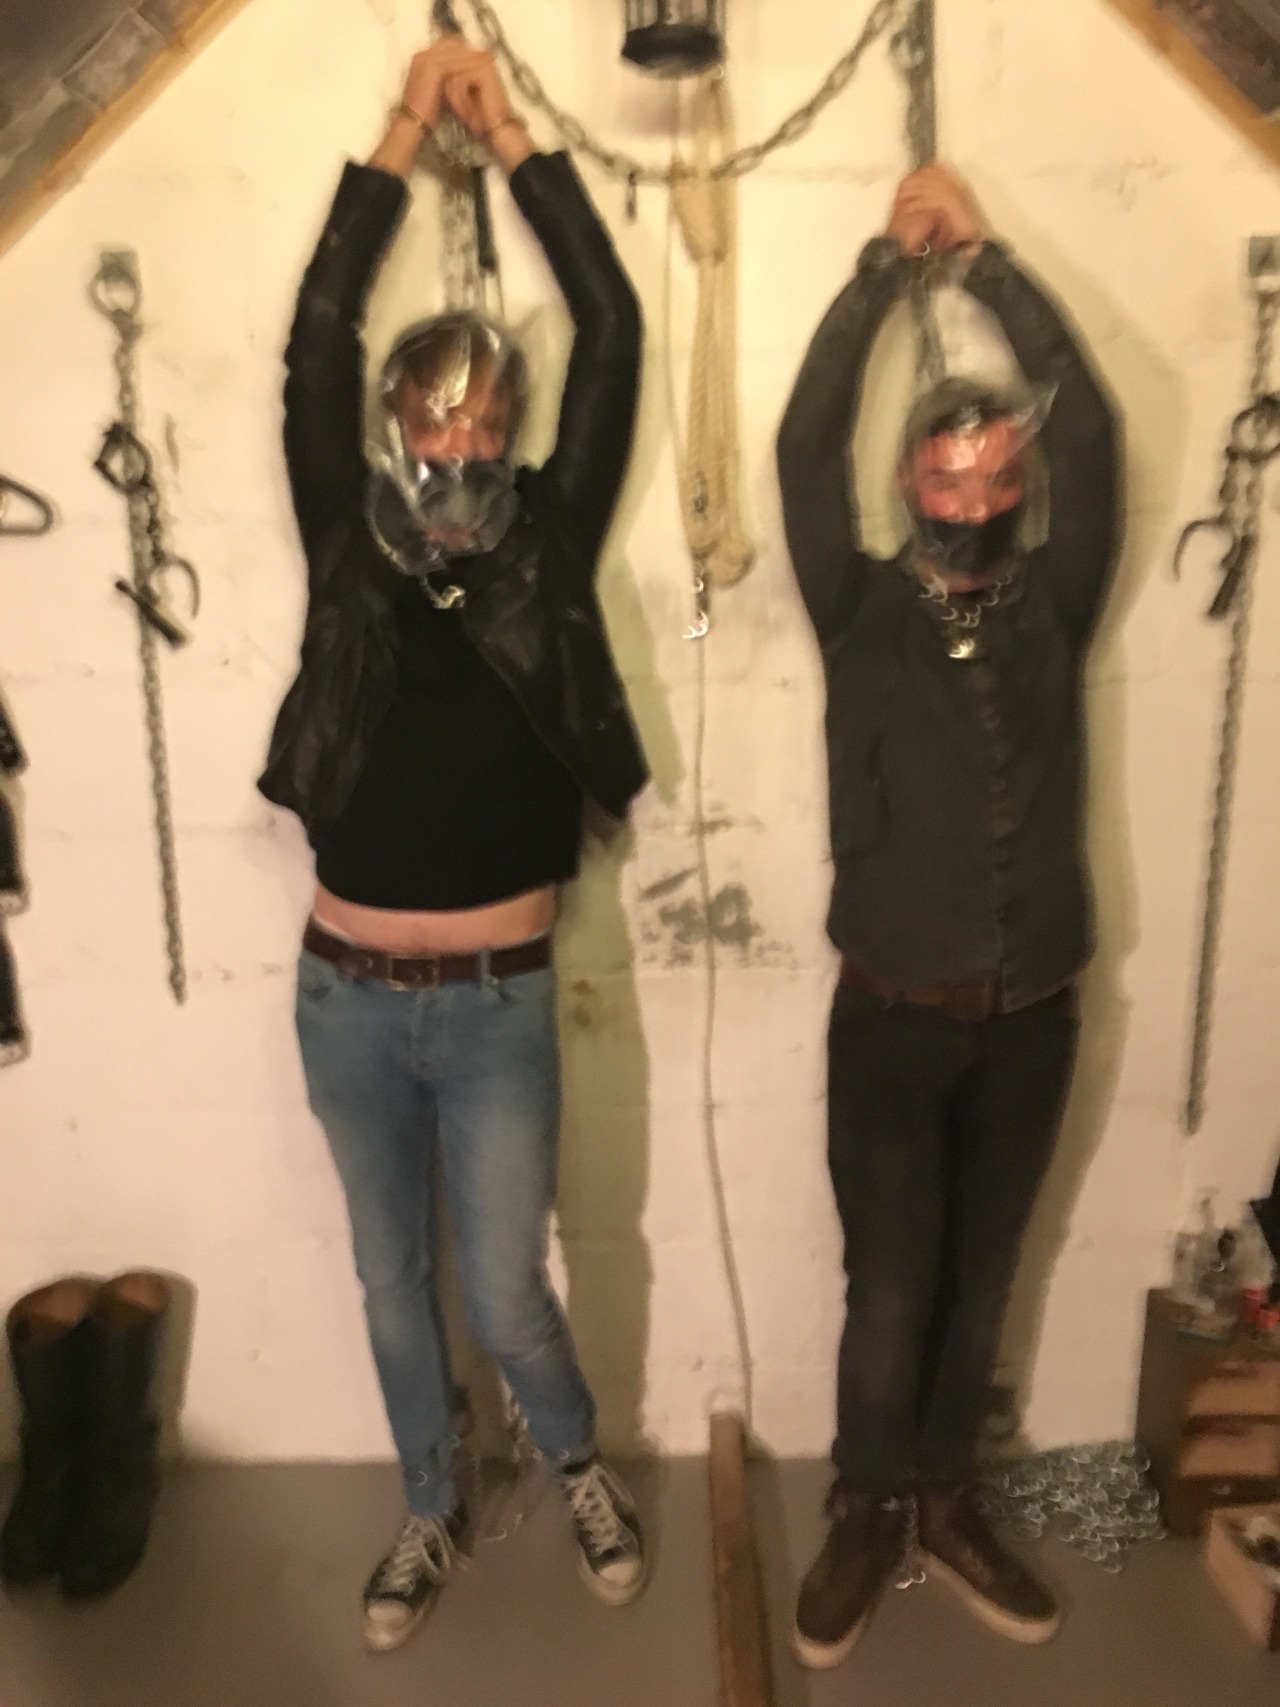 jamesbondagesx:  Two lads captured and restrained. 